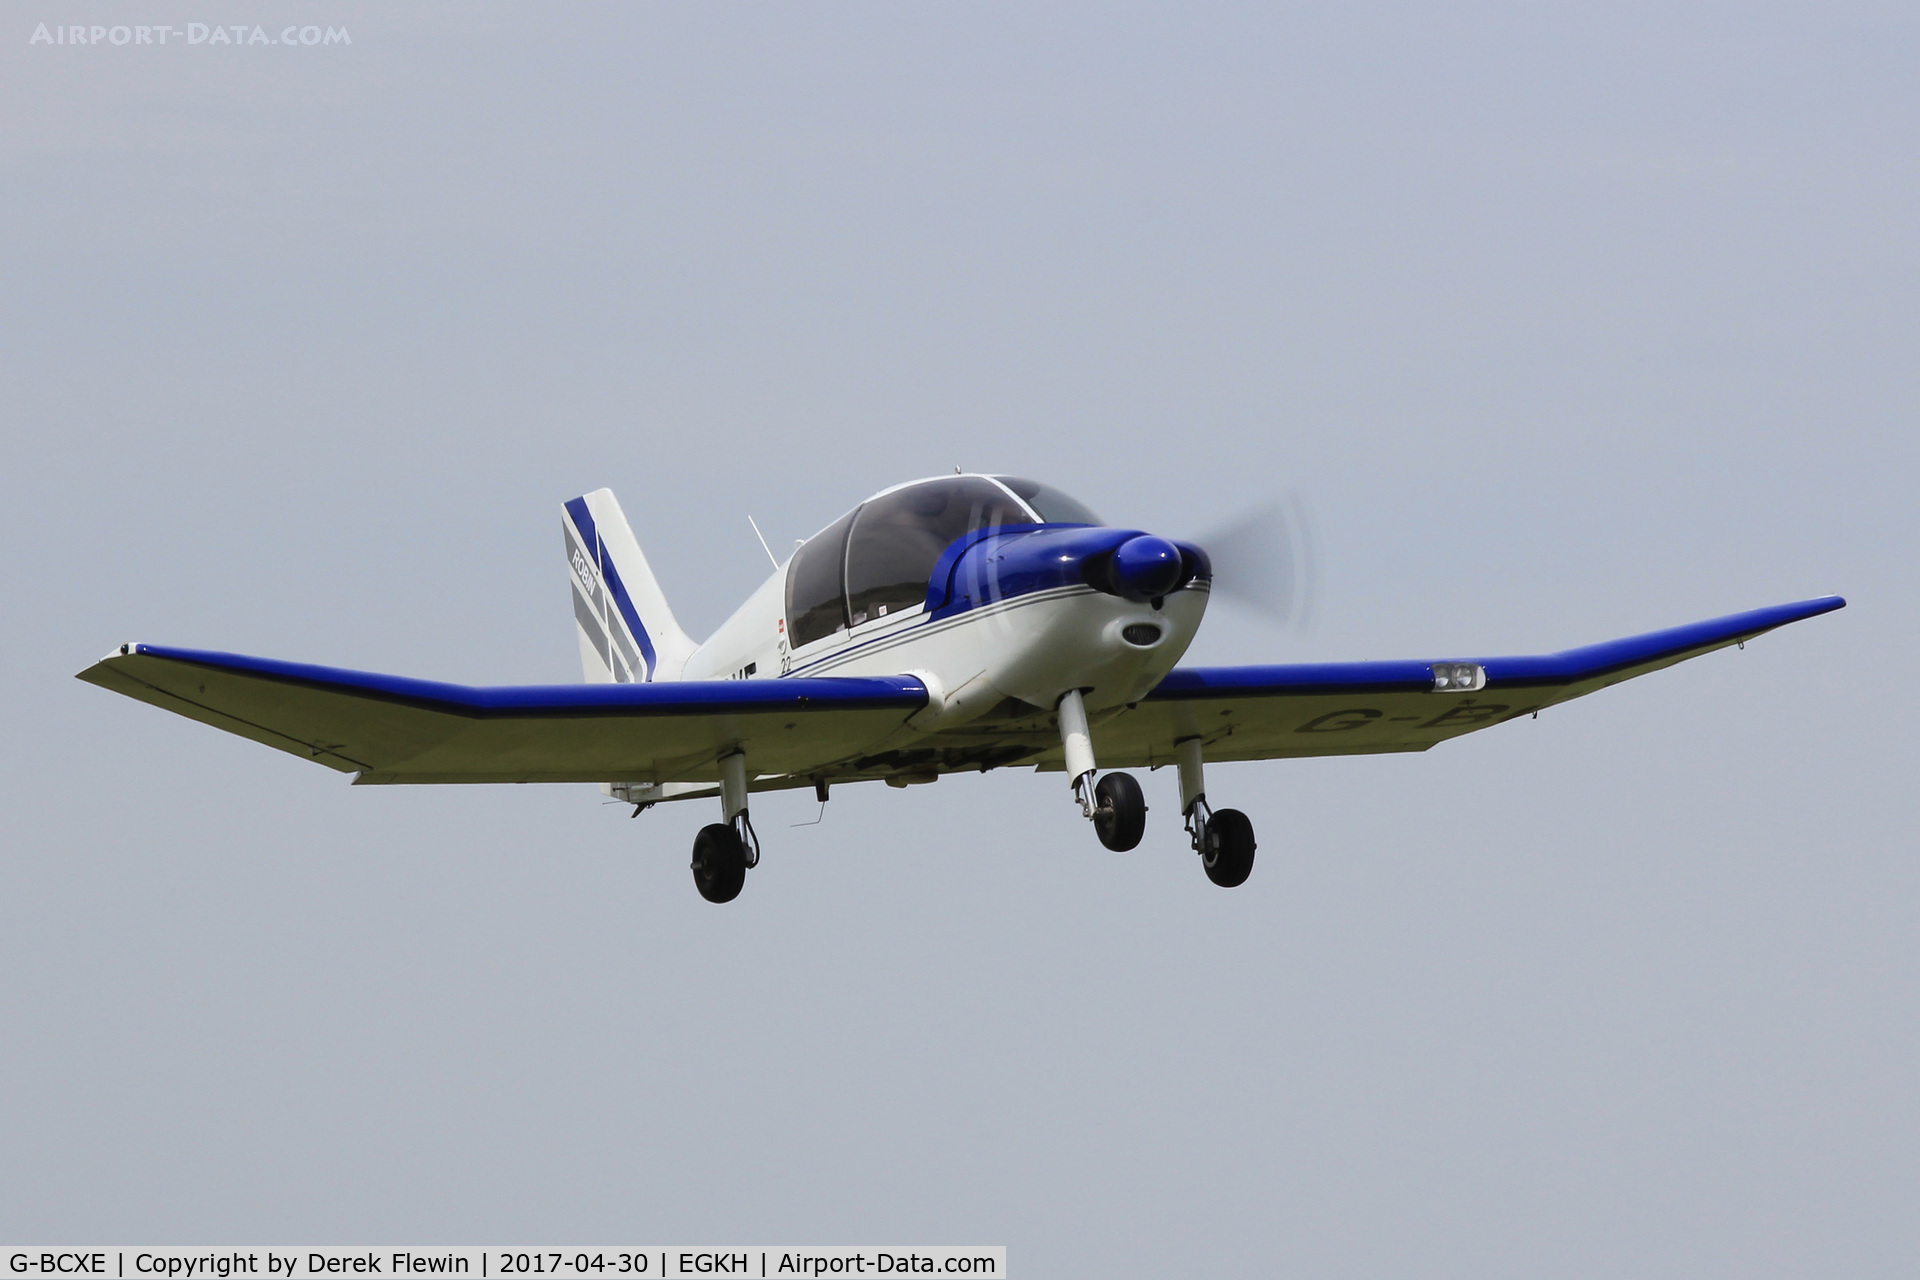 G-BCXE, 1975 Robin DR-400-108  Dauphin 2+2 C/N 1015, Dauphin, Headcorn kent based, seen departing runway 10.